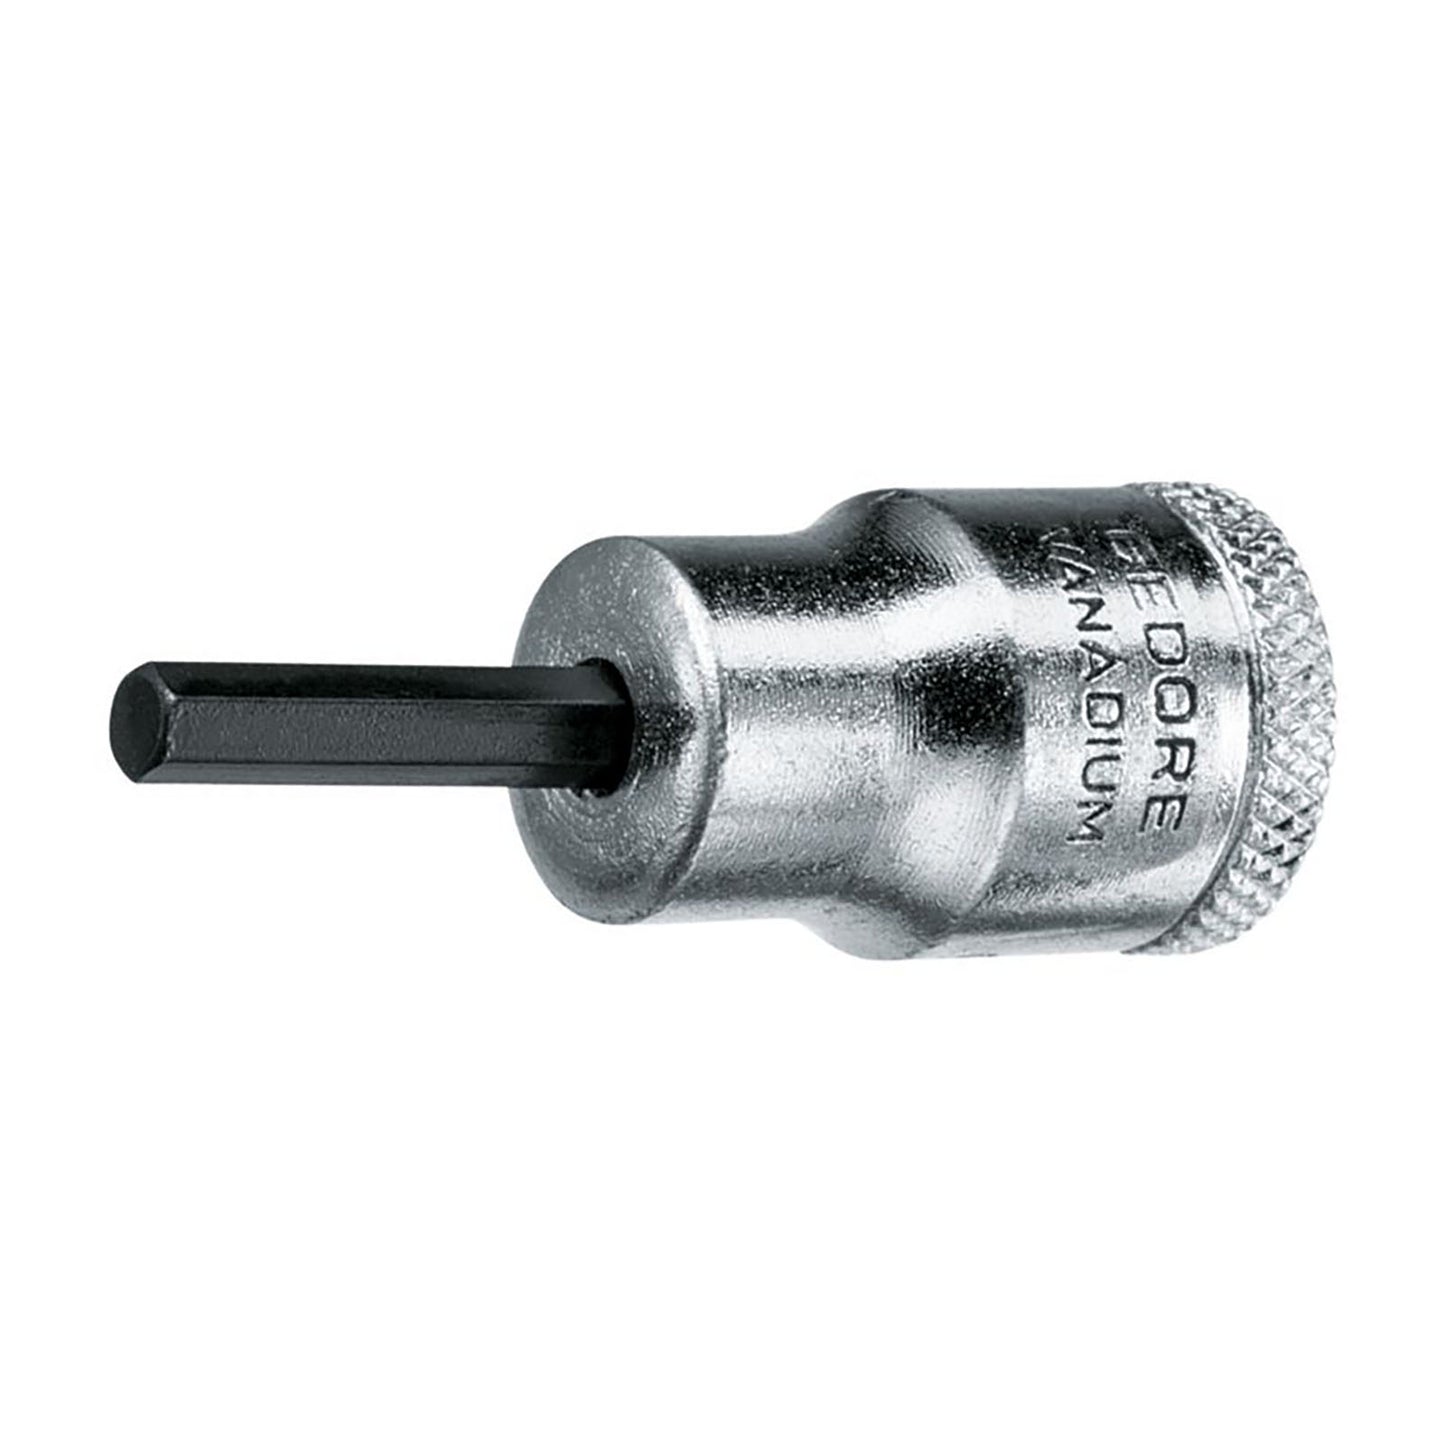 GEDORE IN 30 7 - INBUS® socket 3/8", 7 mm (1643037)